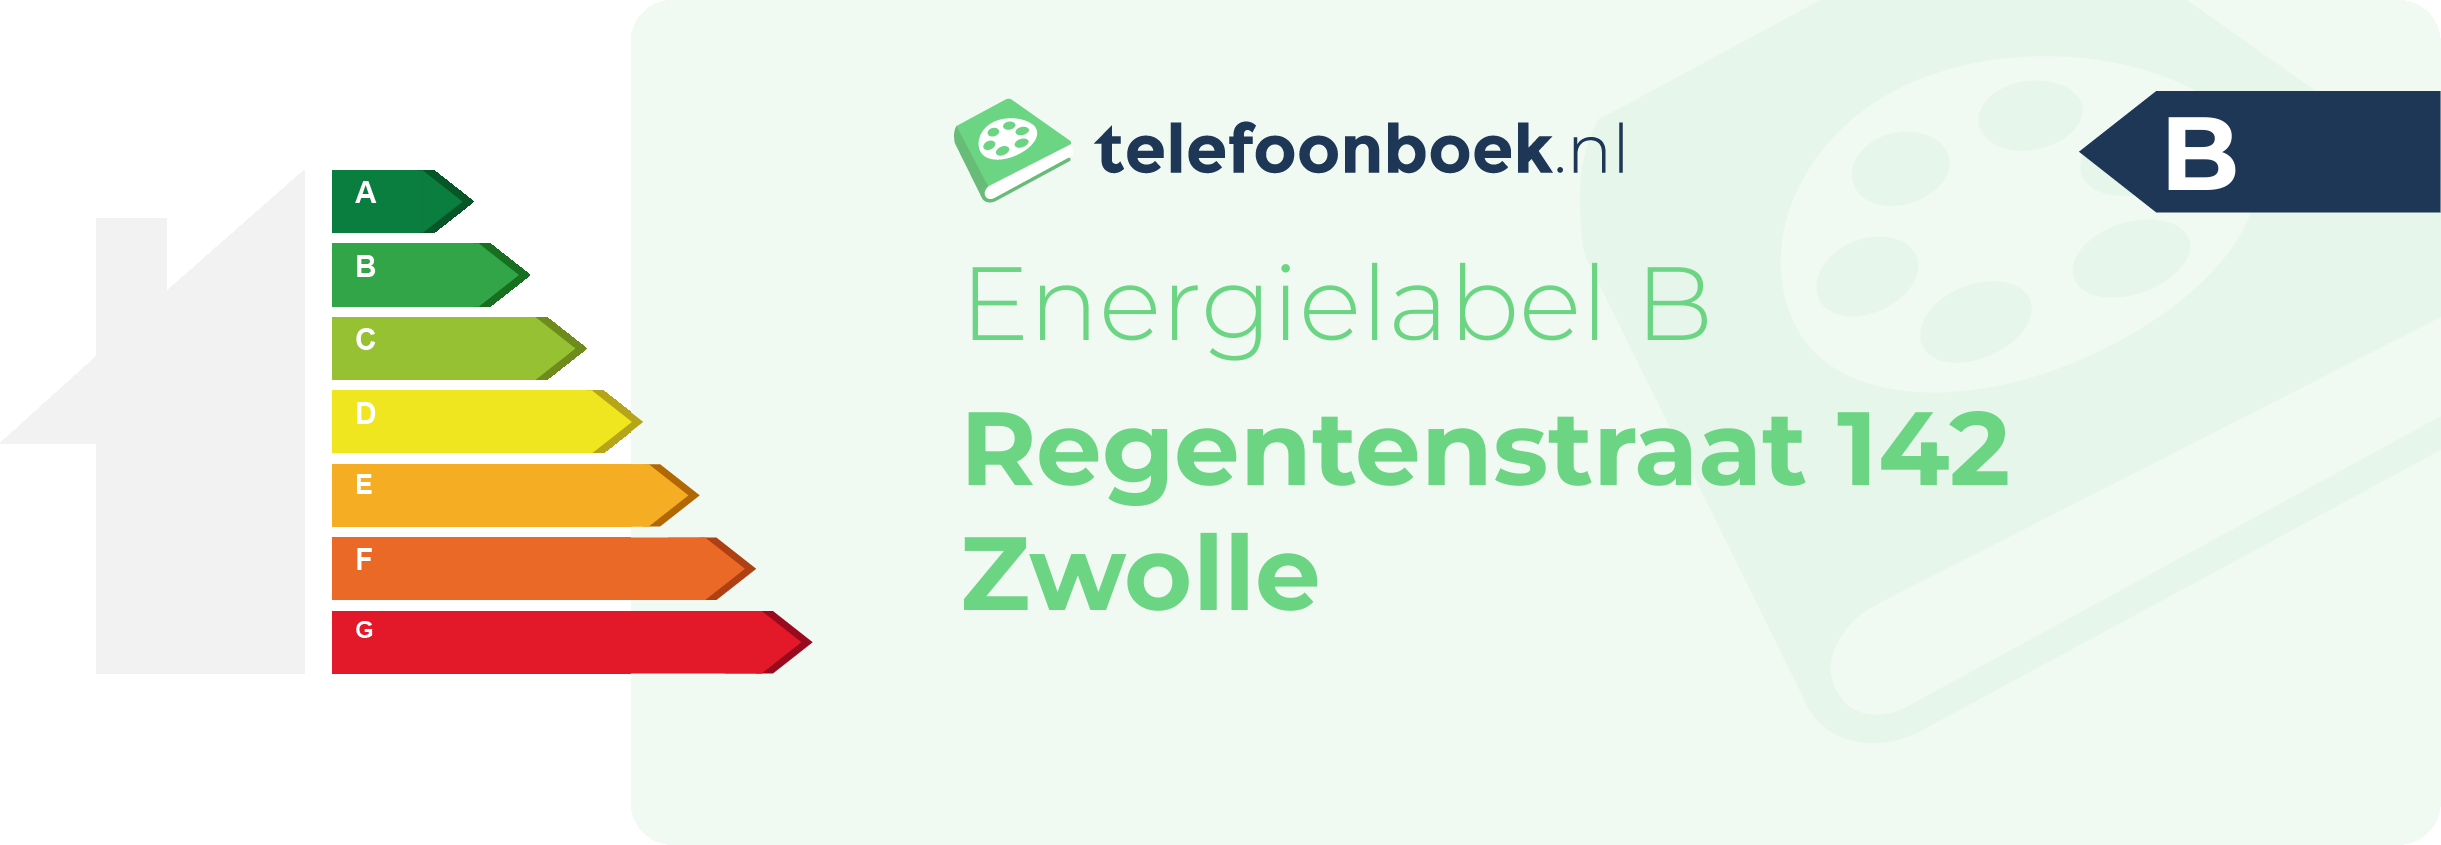 Energielabel Regentenstraat 142 Zwolle